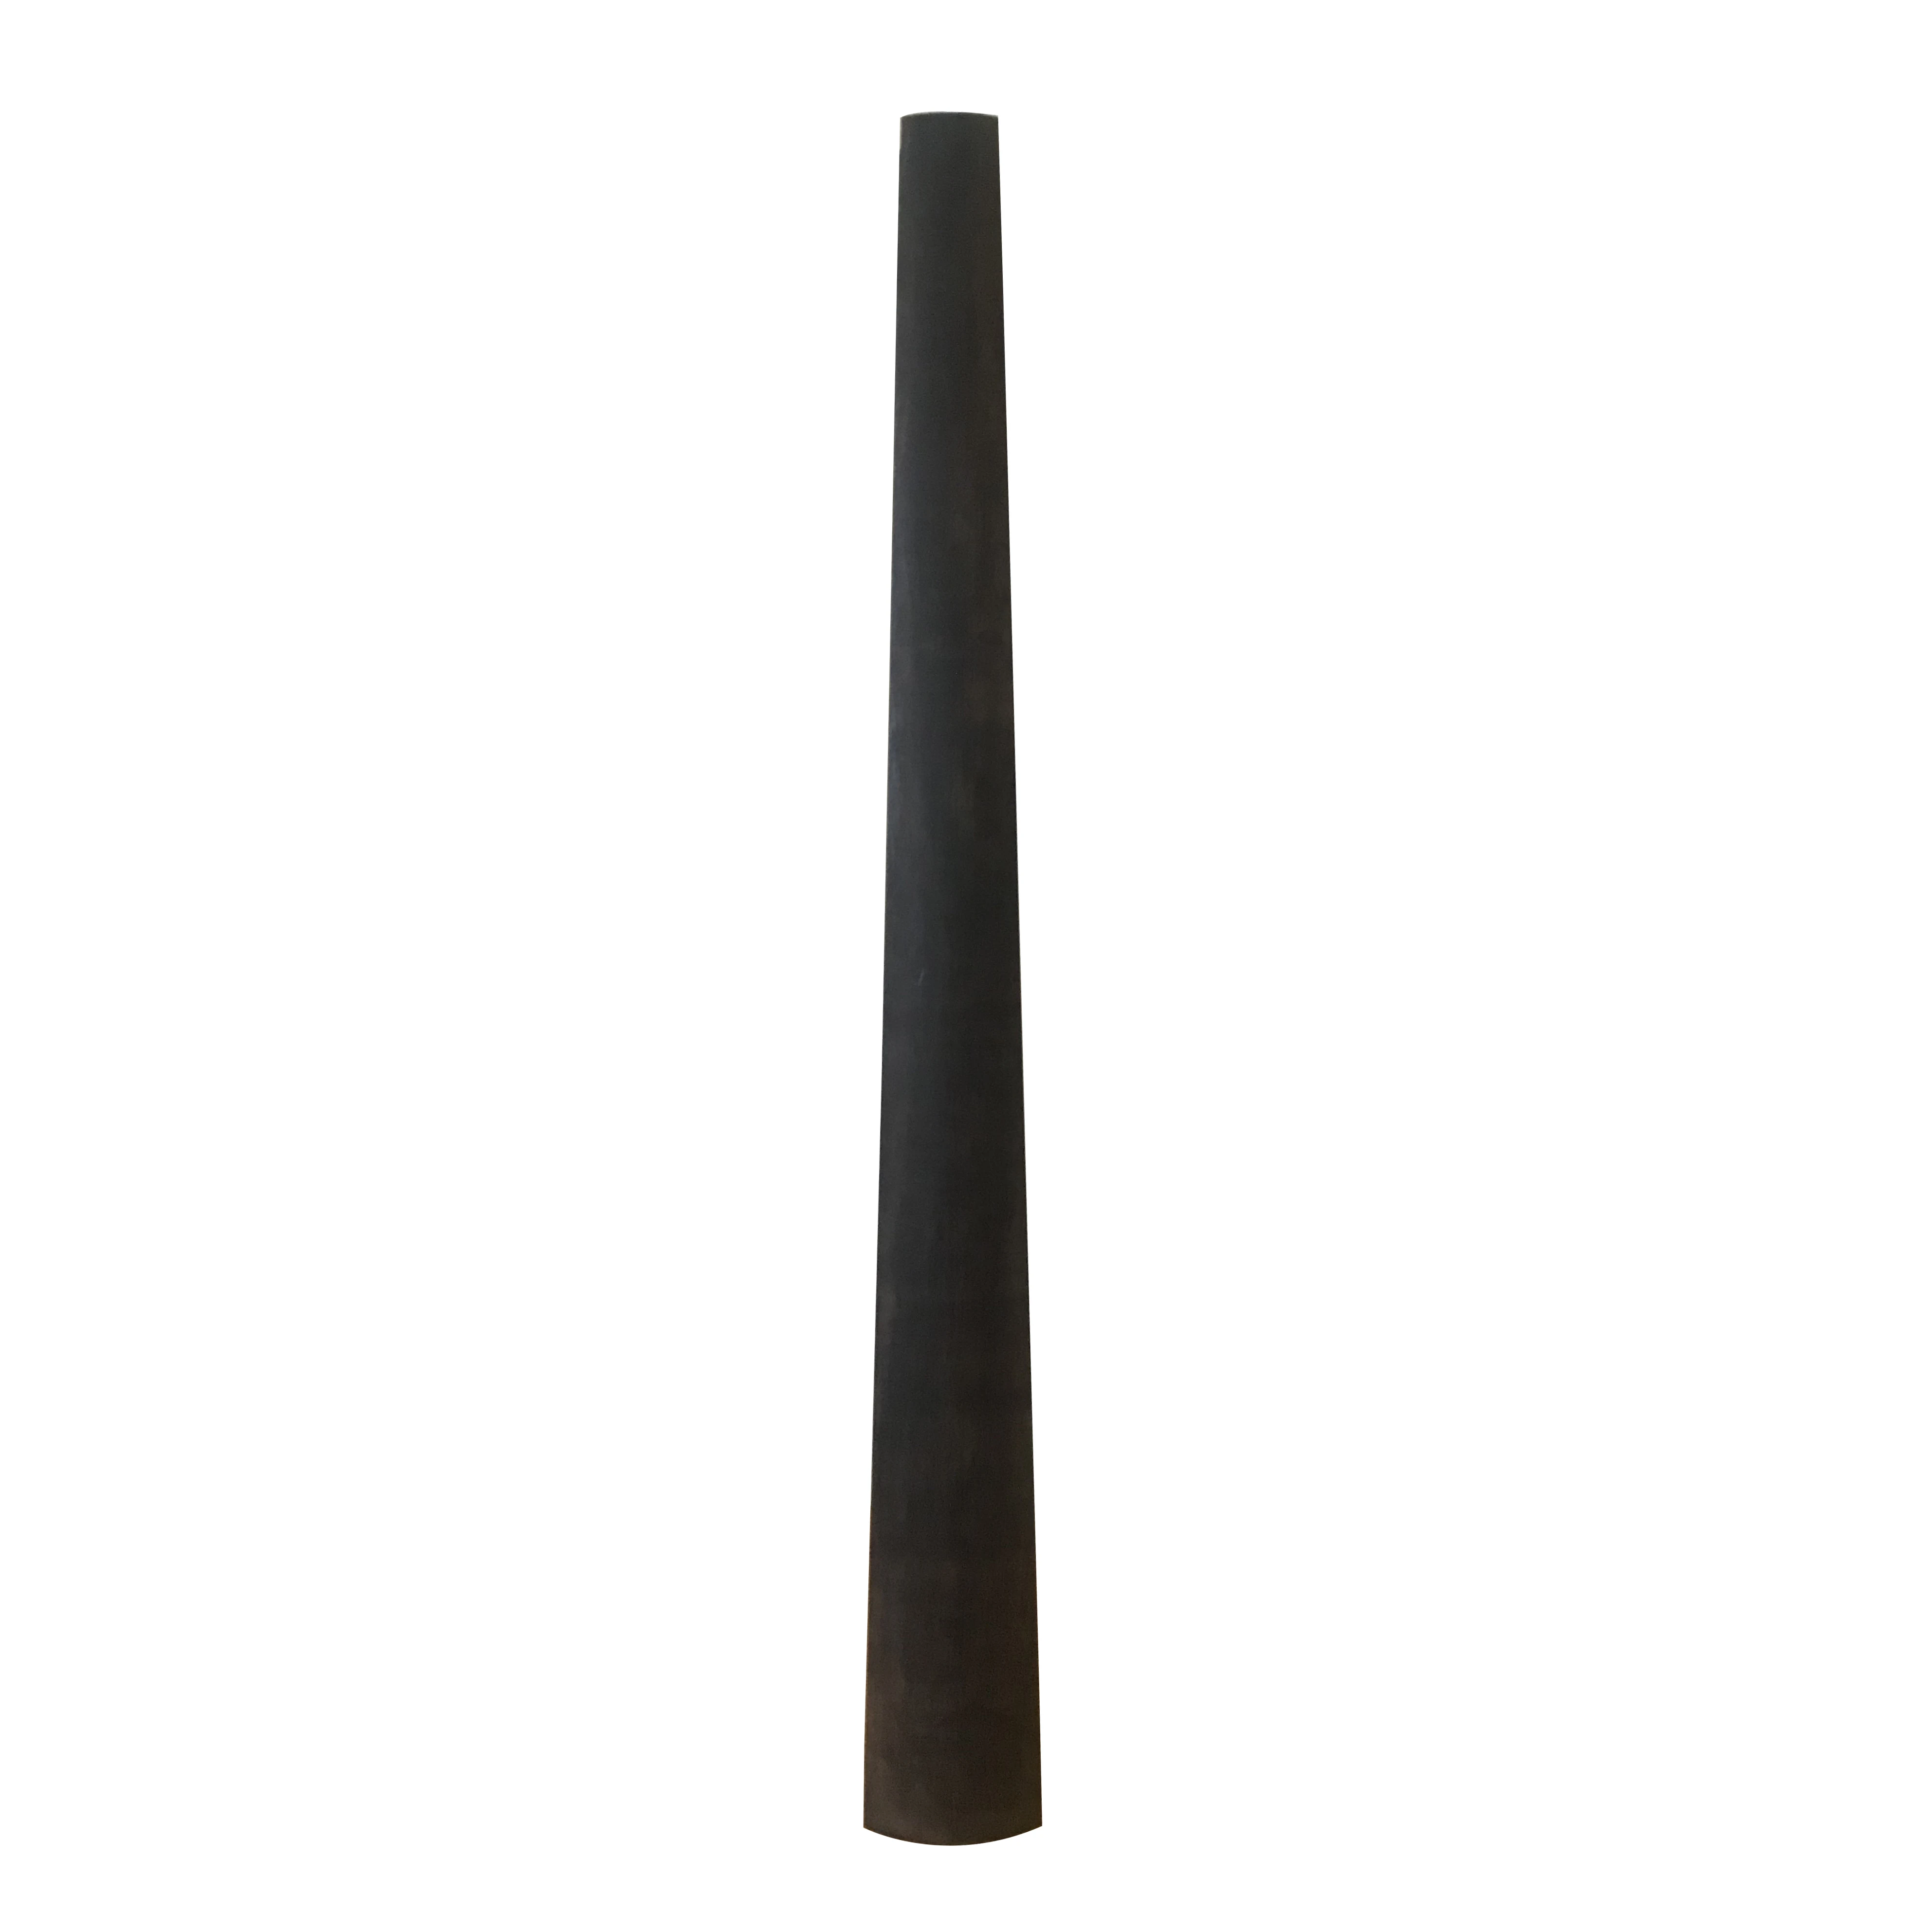 contrabaixo-vertical-fingerboard-undyed-madeira-natural-ebony-contrabaixo-acessorios-alta-qualidade-1pc-1-8-3-4-4-4-novo